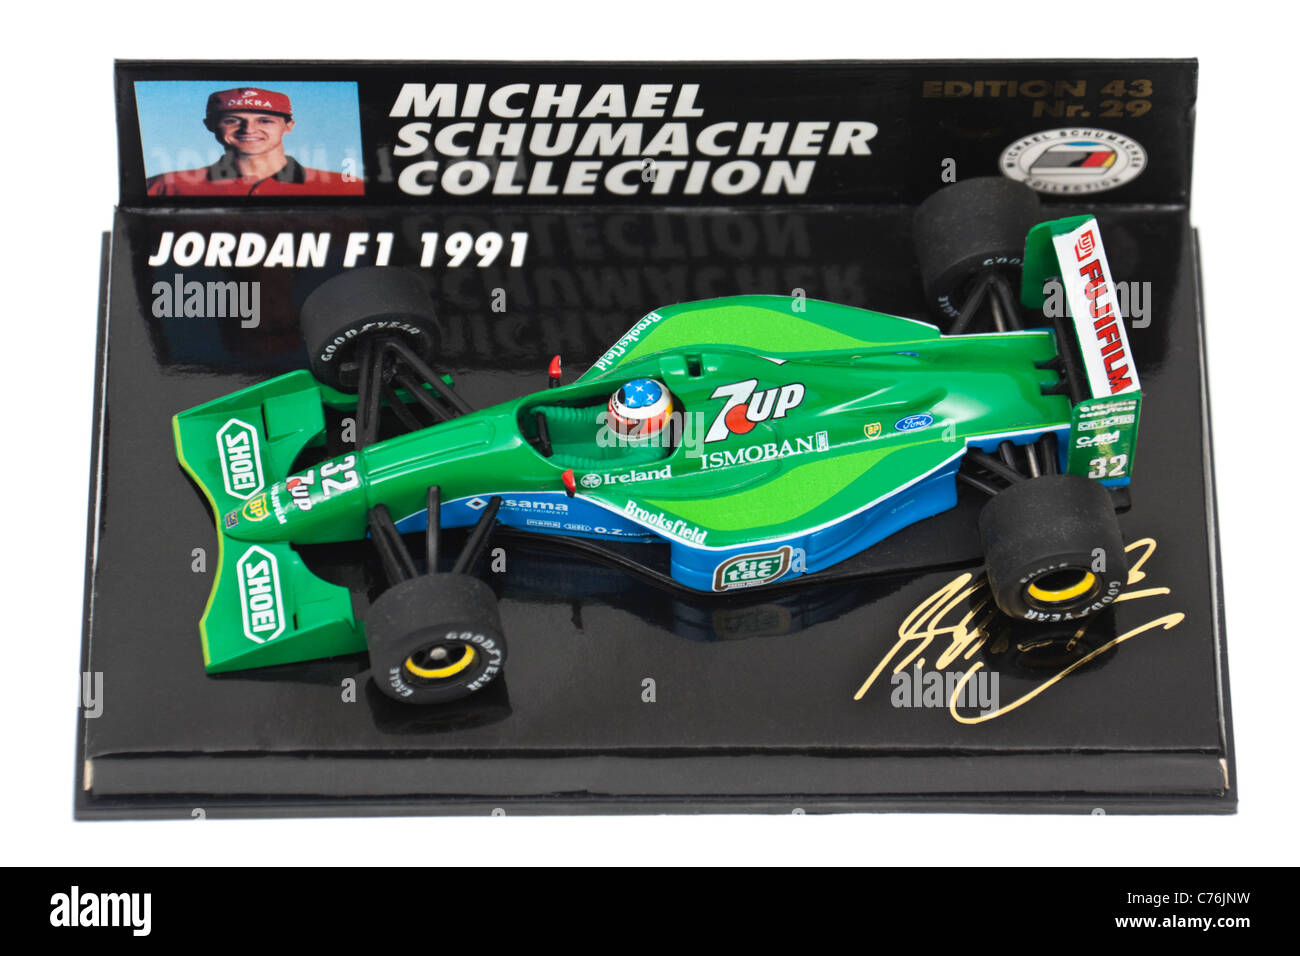 1991 Jordan F1 Racing Car (Michael Schumacher's first Formula One racing  car), 1:43 scale model Stock Photo - Alamy